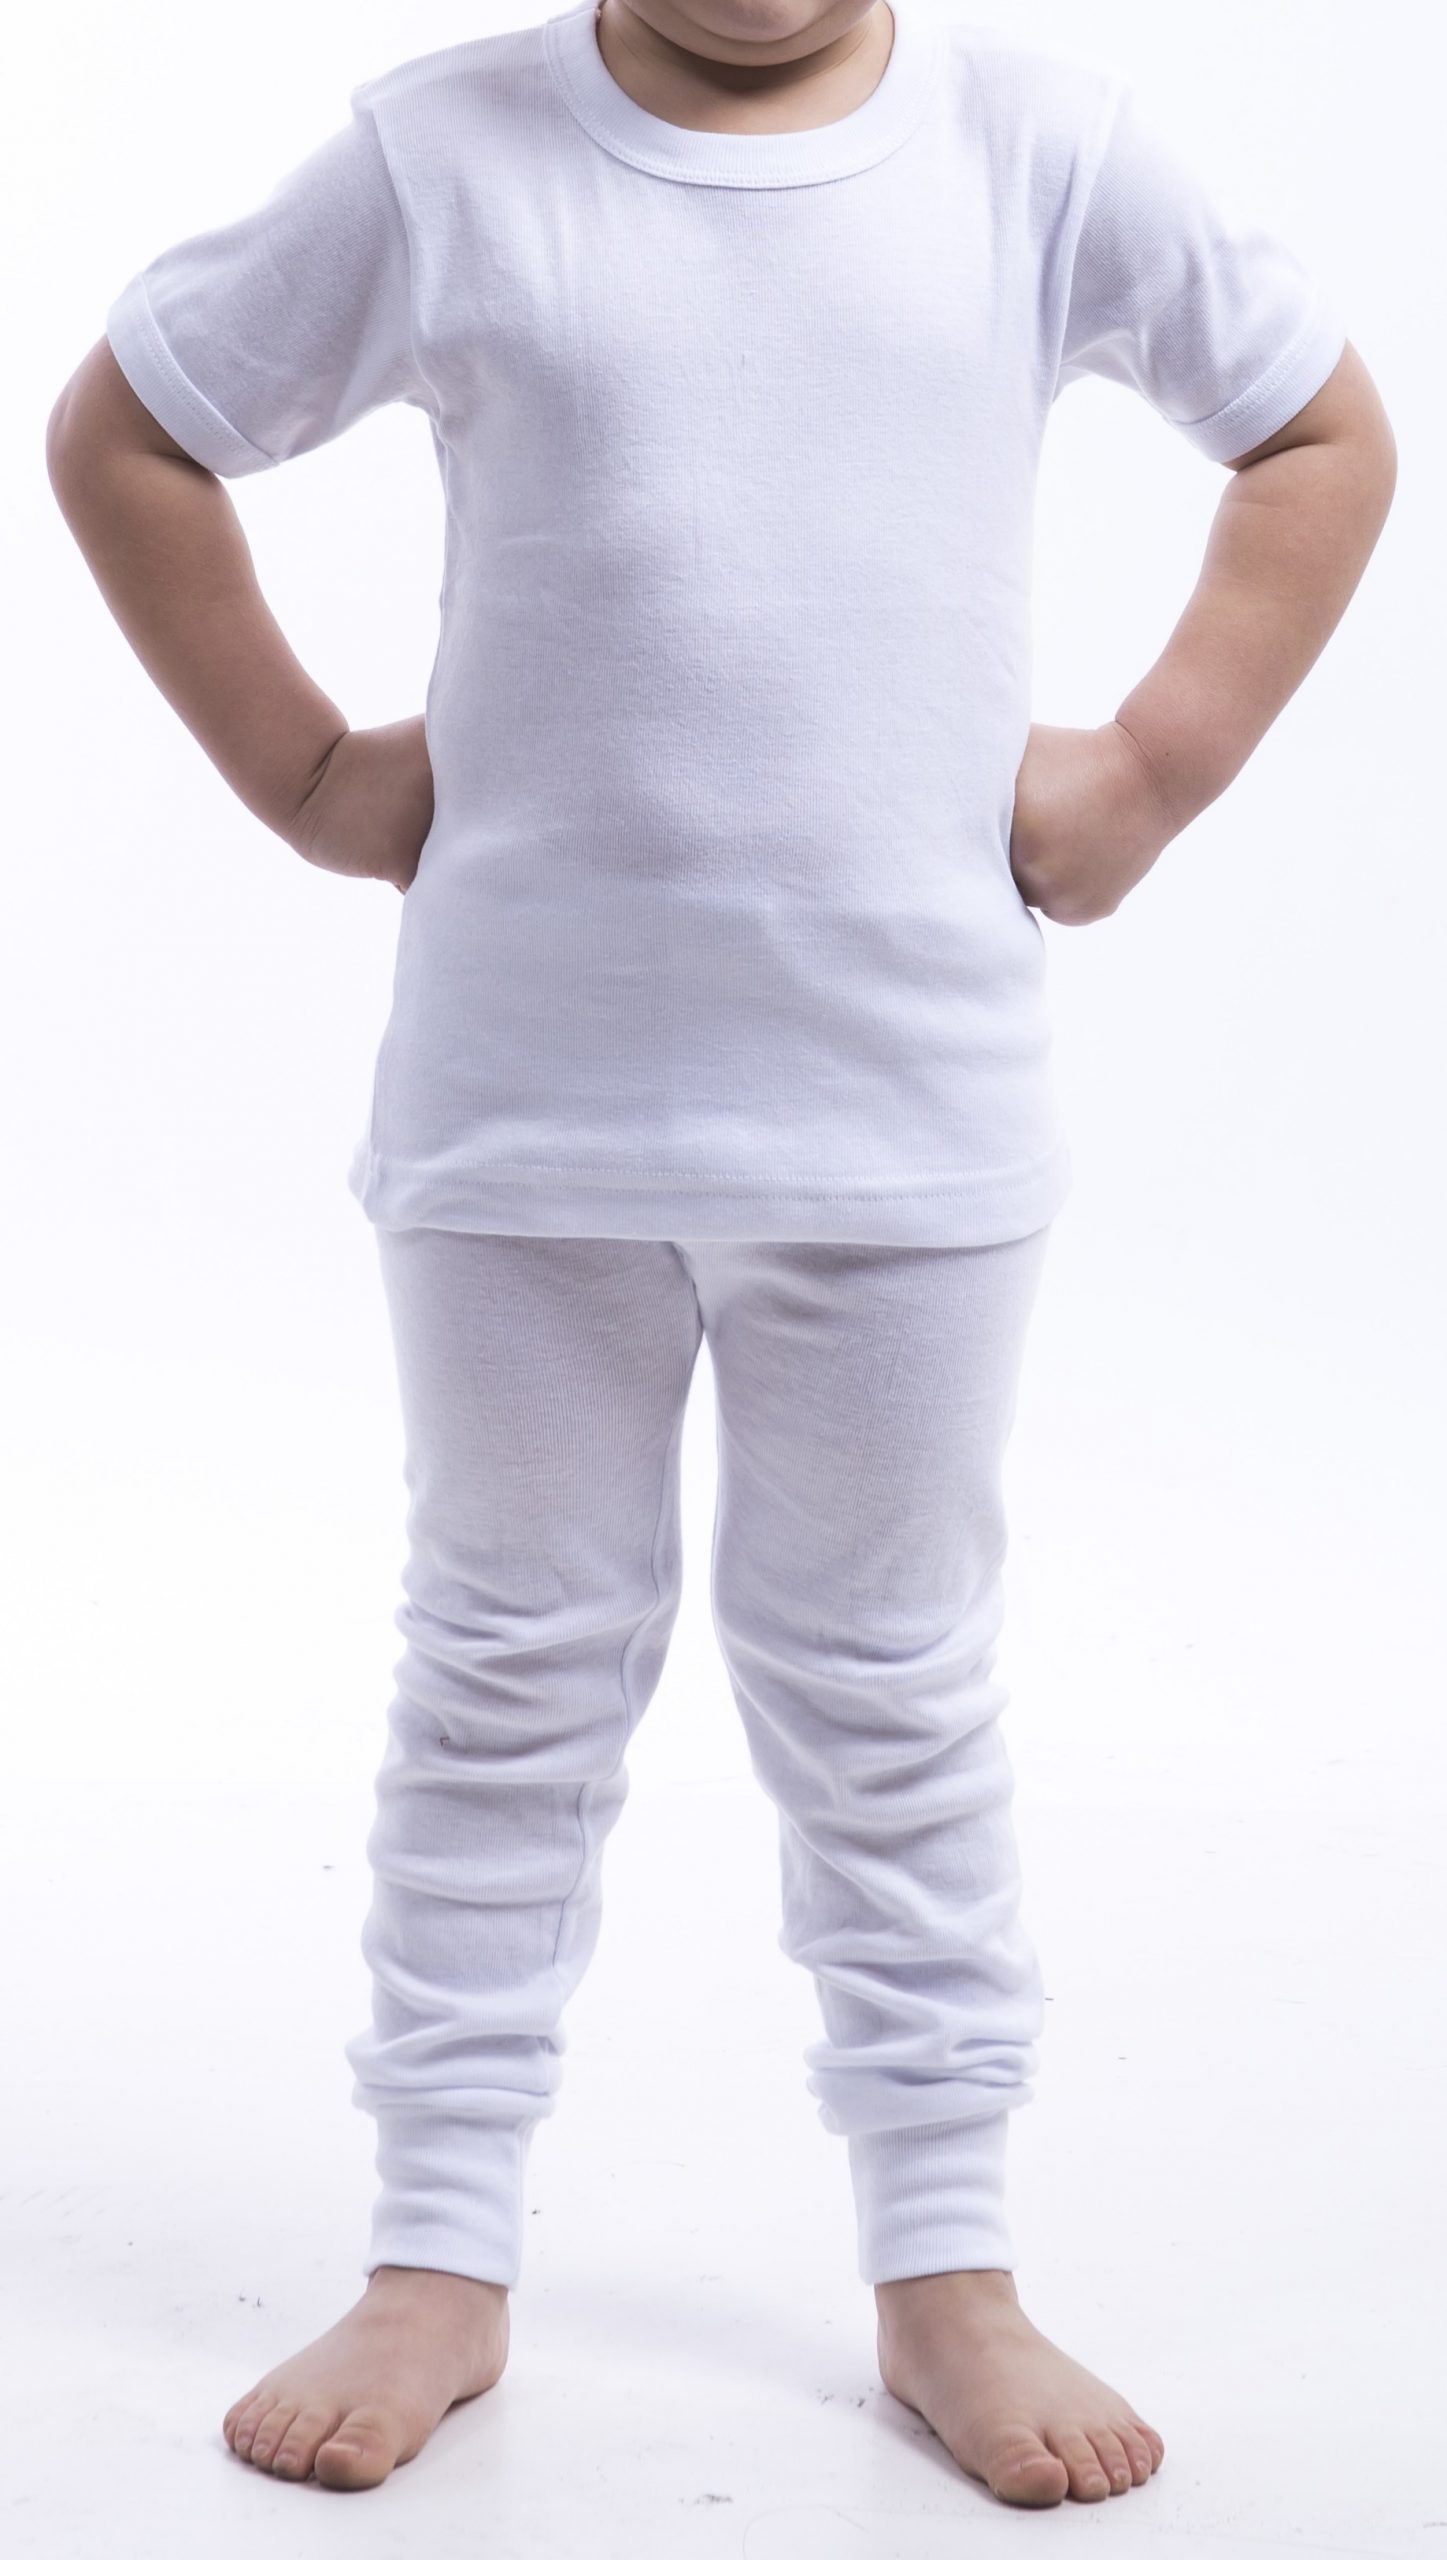 Camiseta niño manga corta blanca